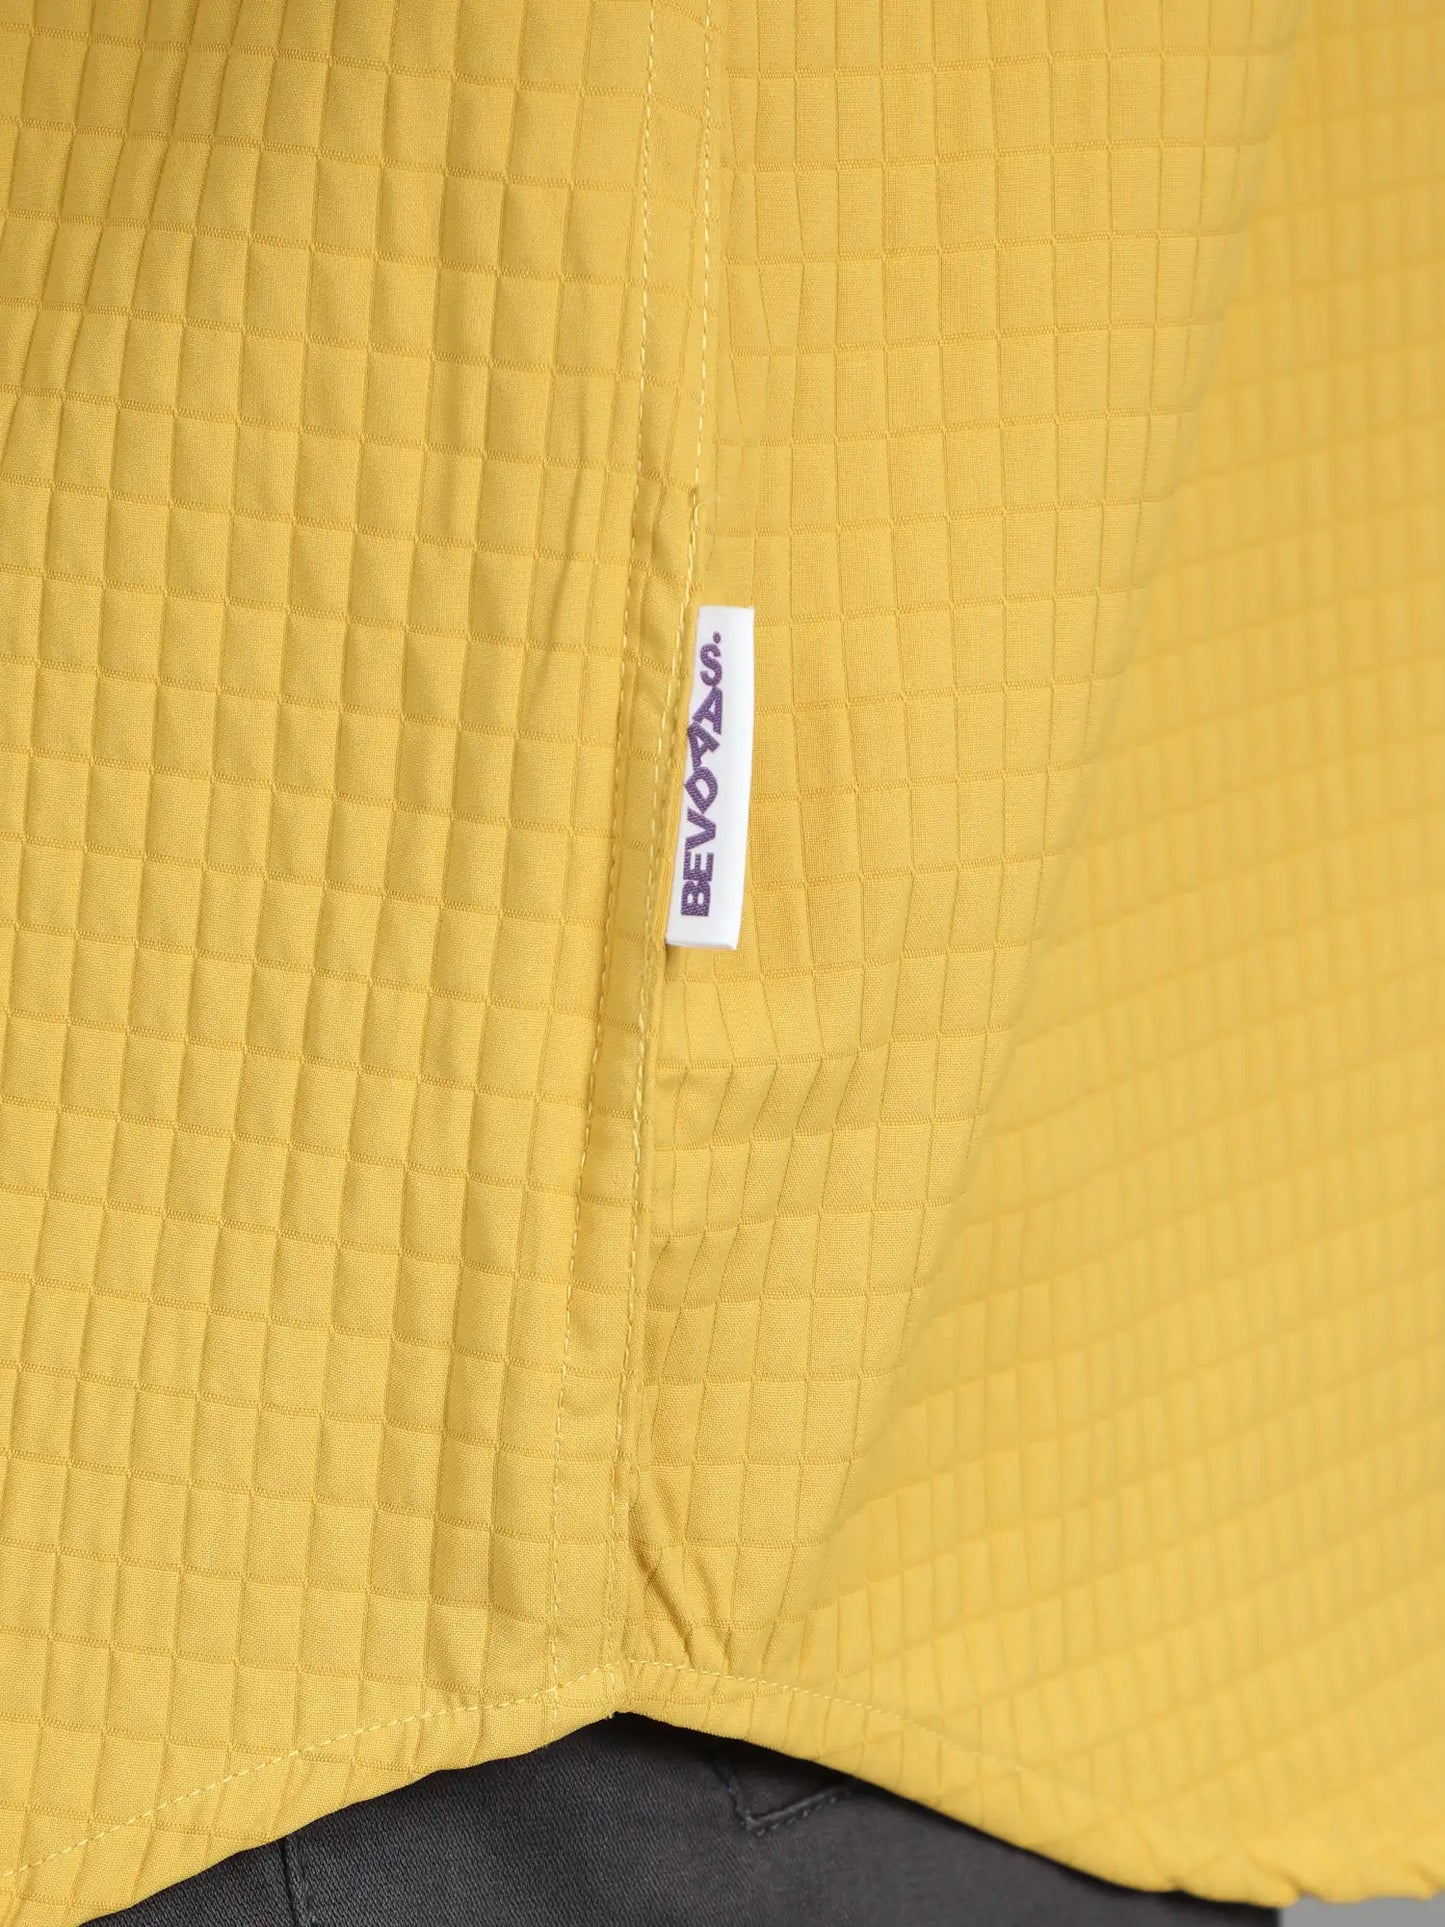 Vibrant Fellow Yellow Imported Drop Shoulder shirt for Men 